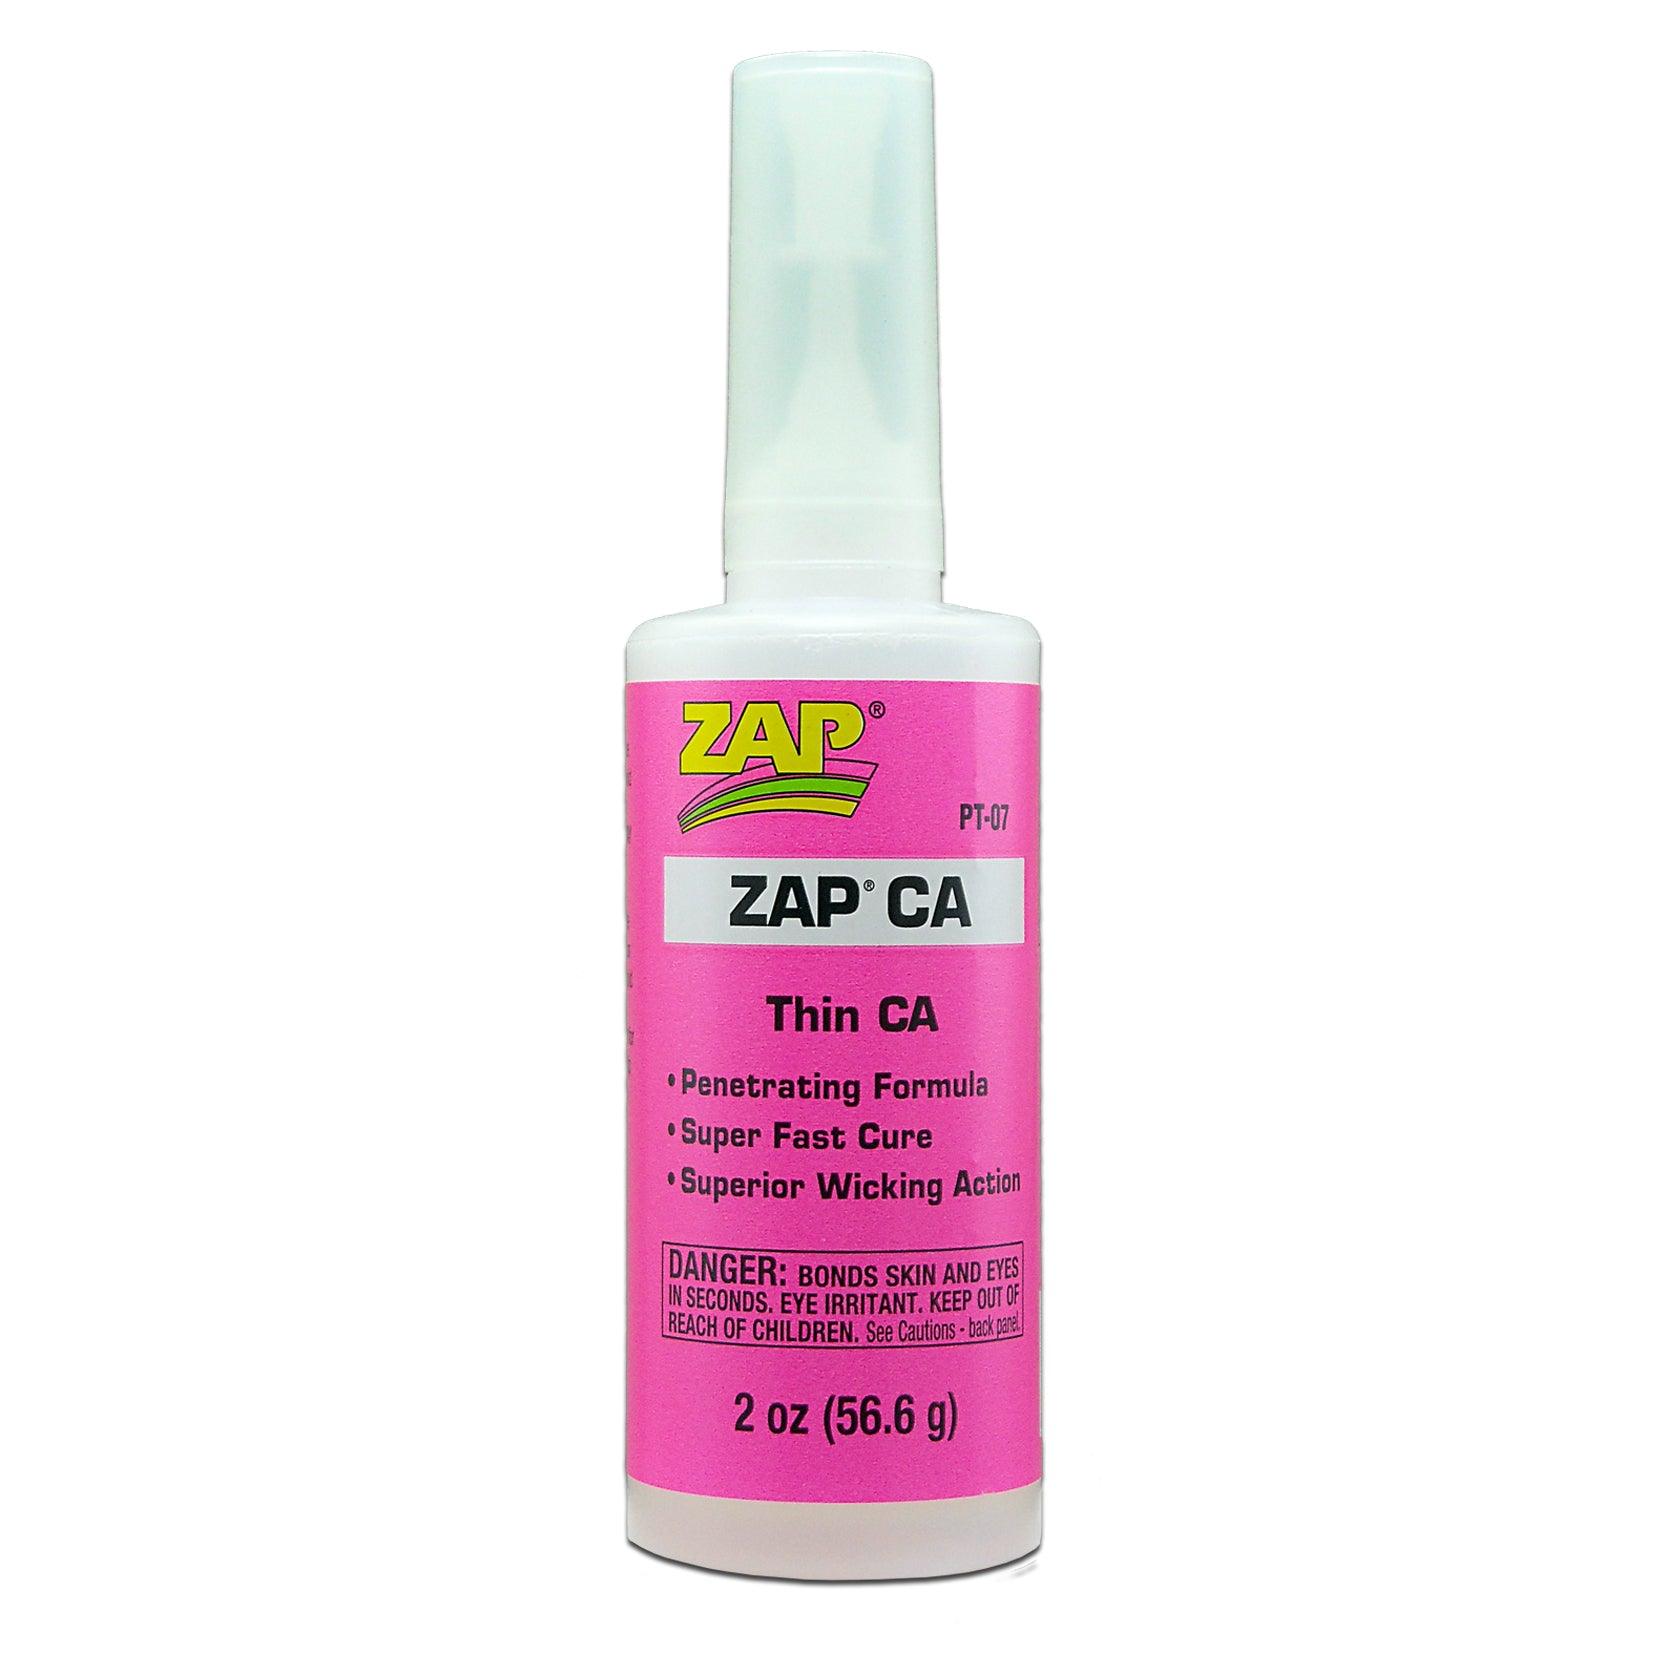 Zap Glue - Finishers Depot